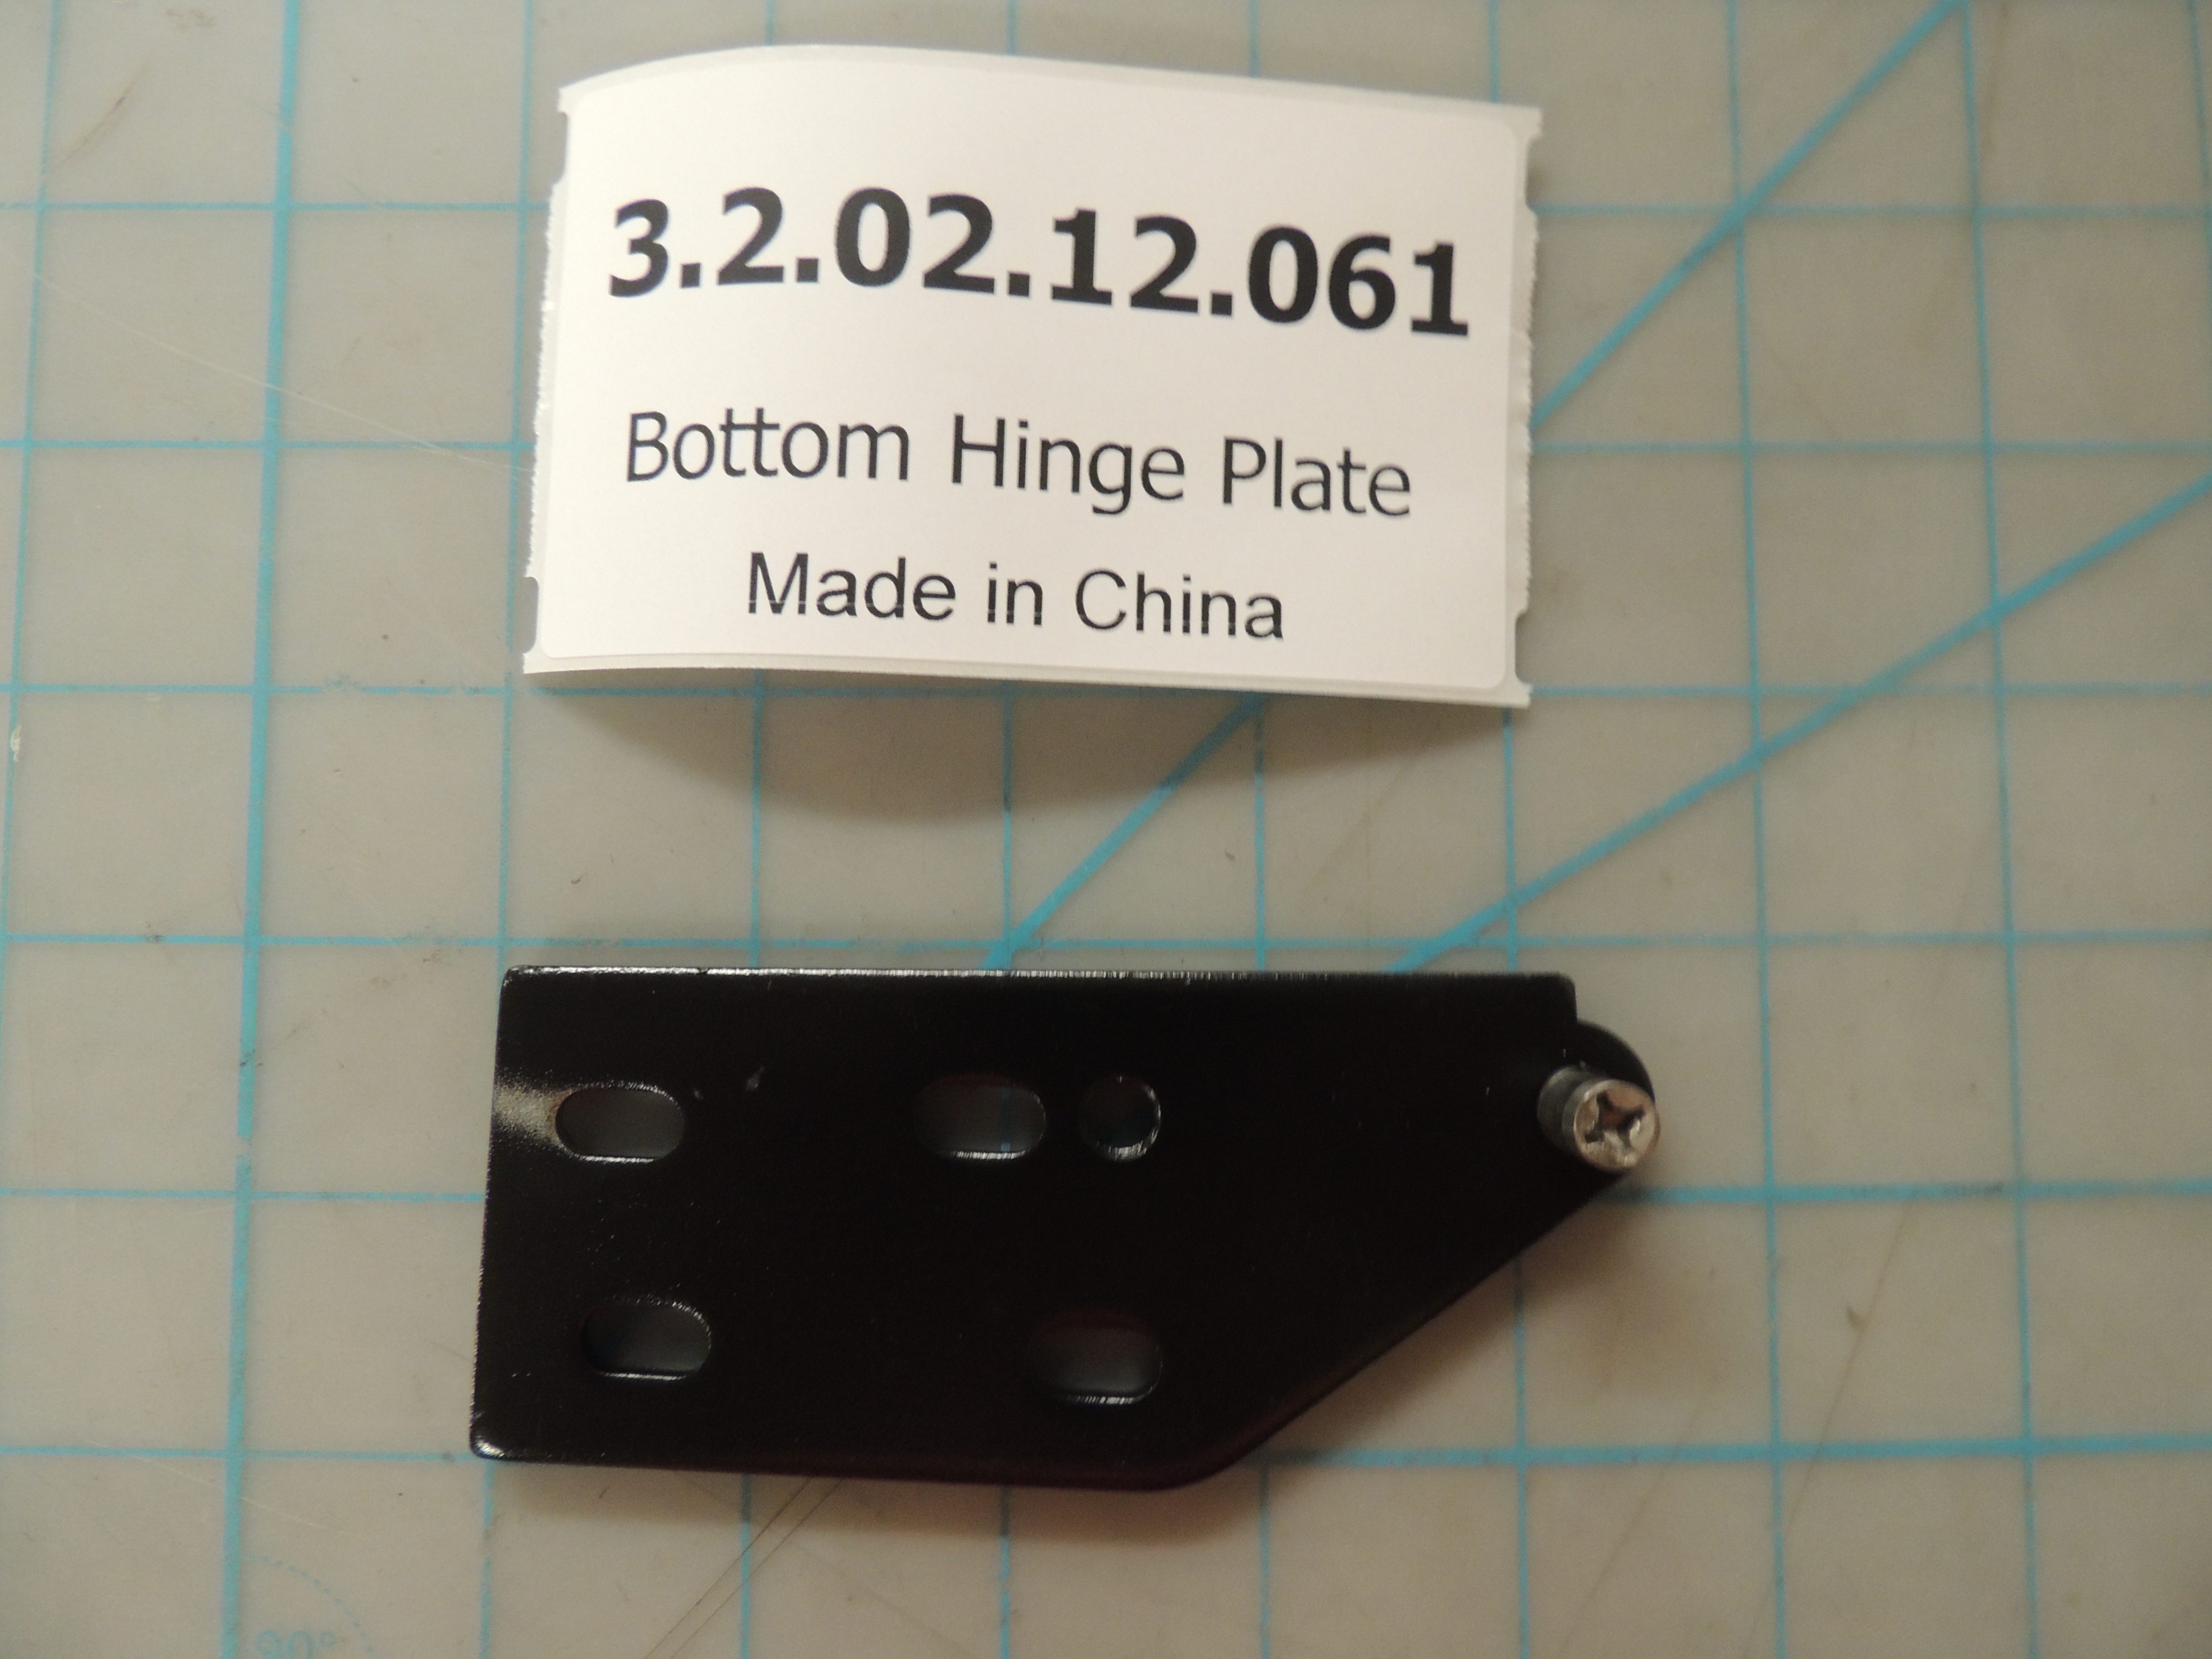 Bottom Hinge Plate